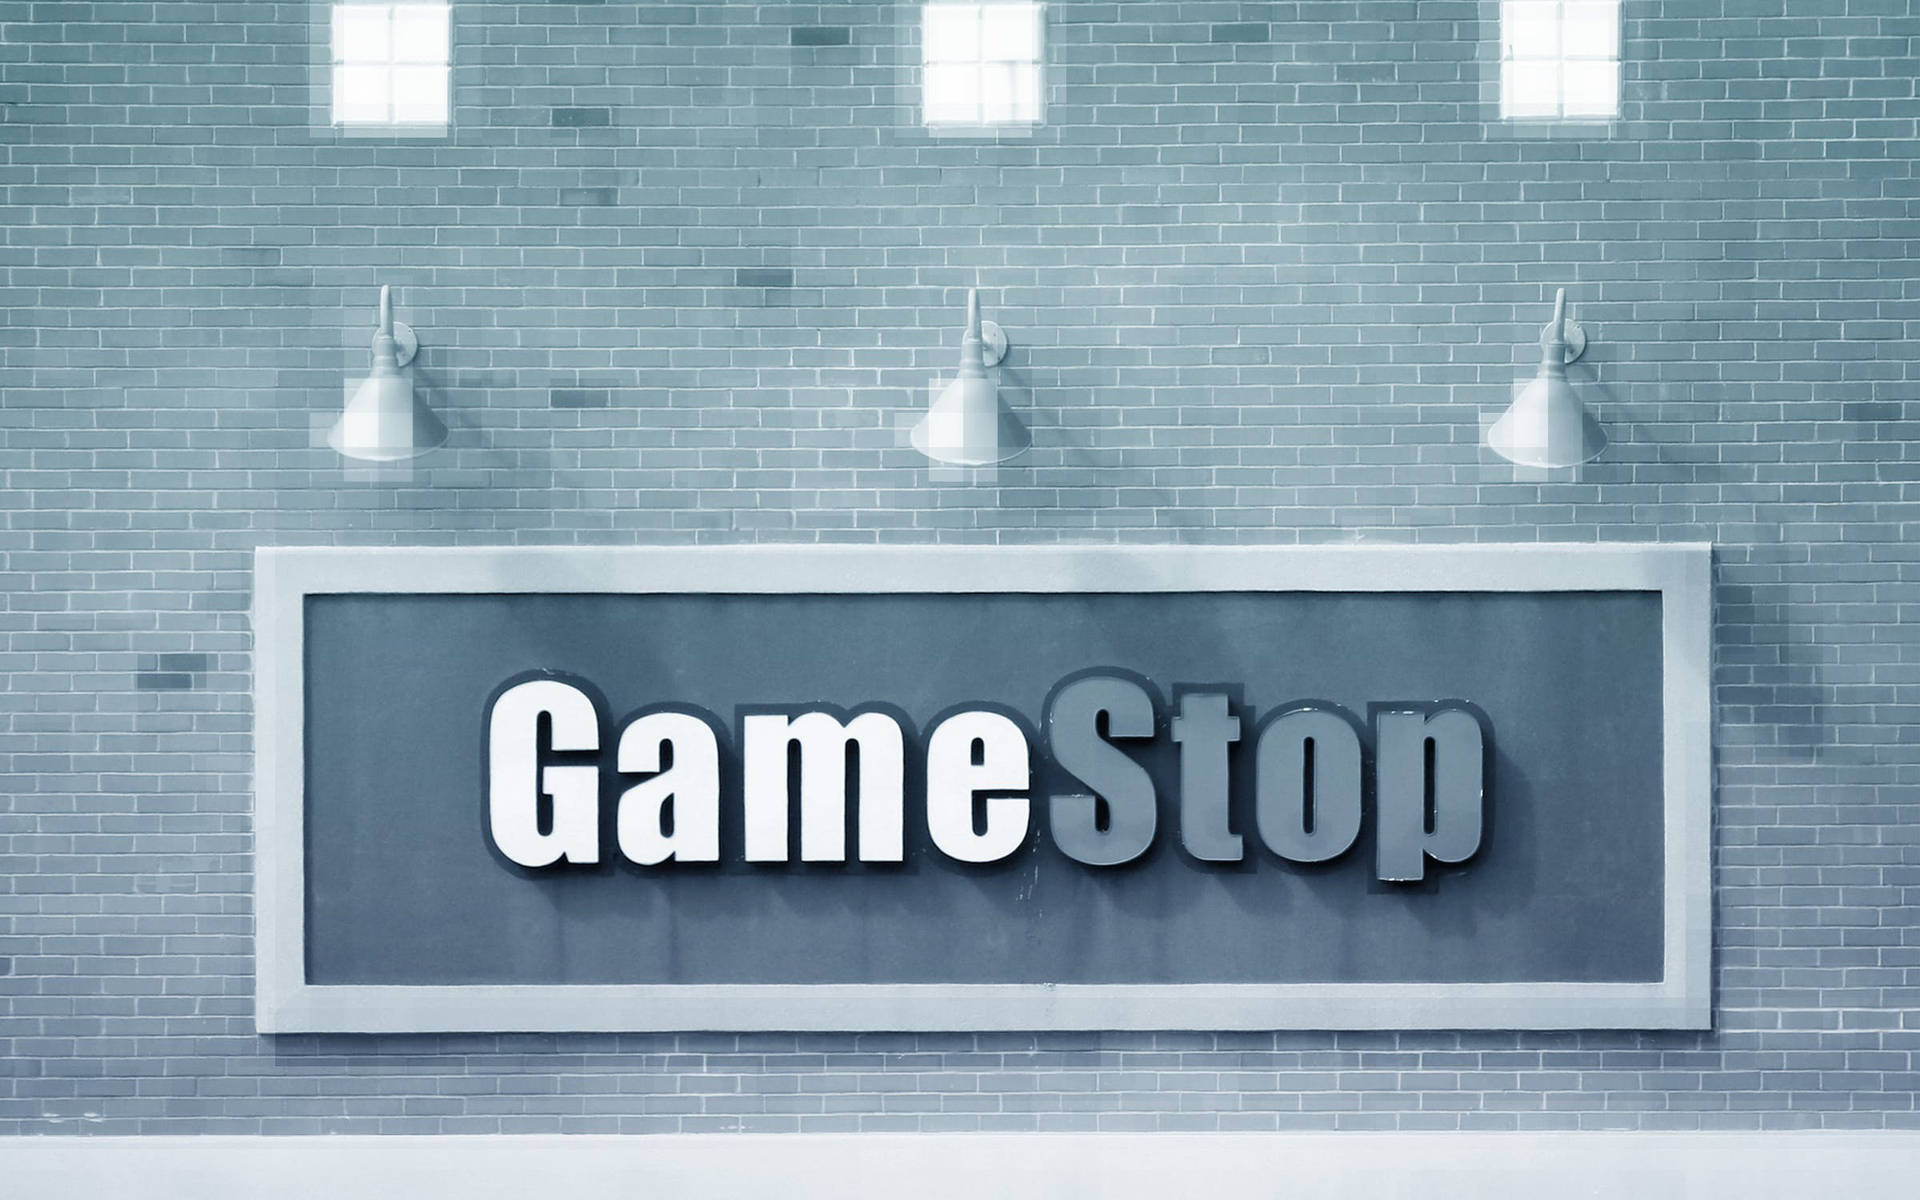 GameStop Gray Brick Wall Background